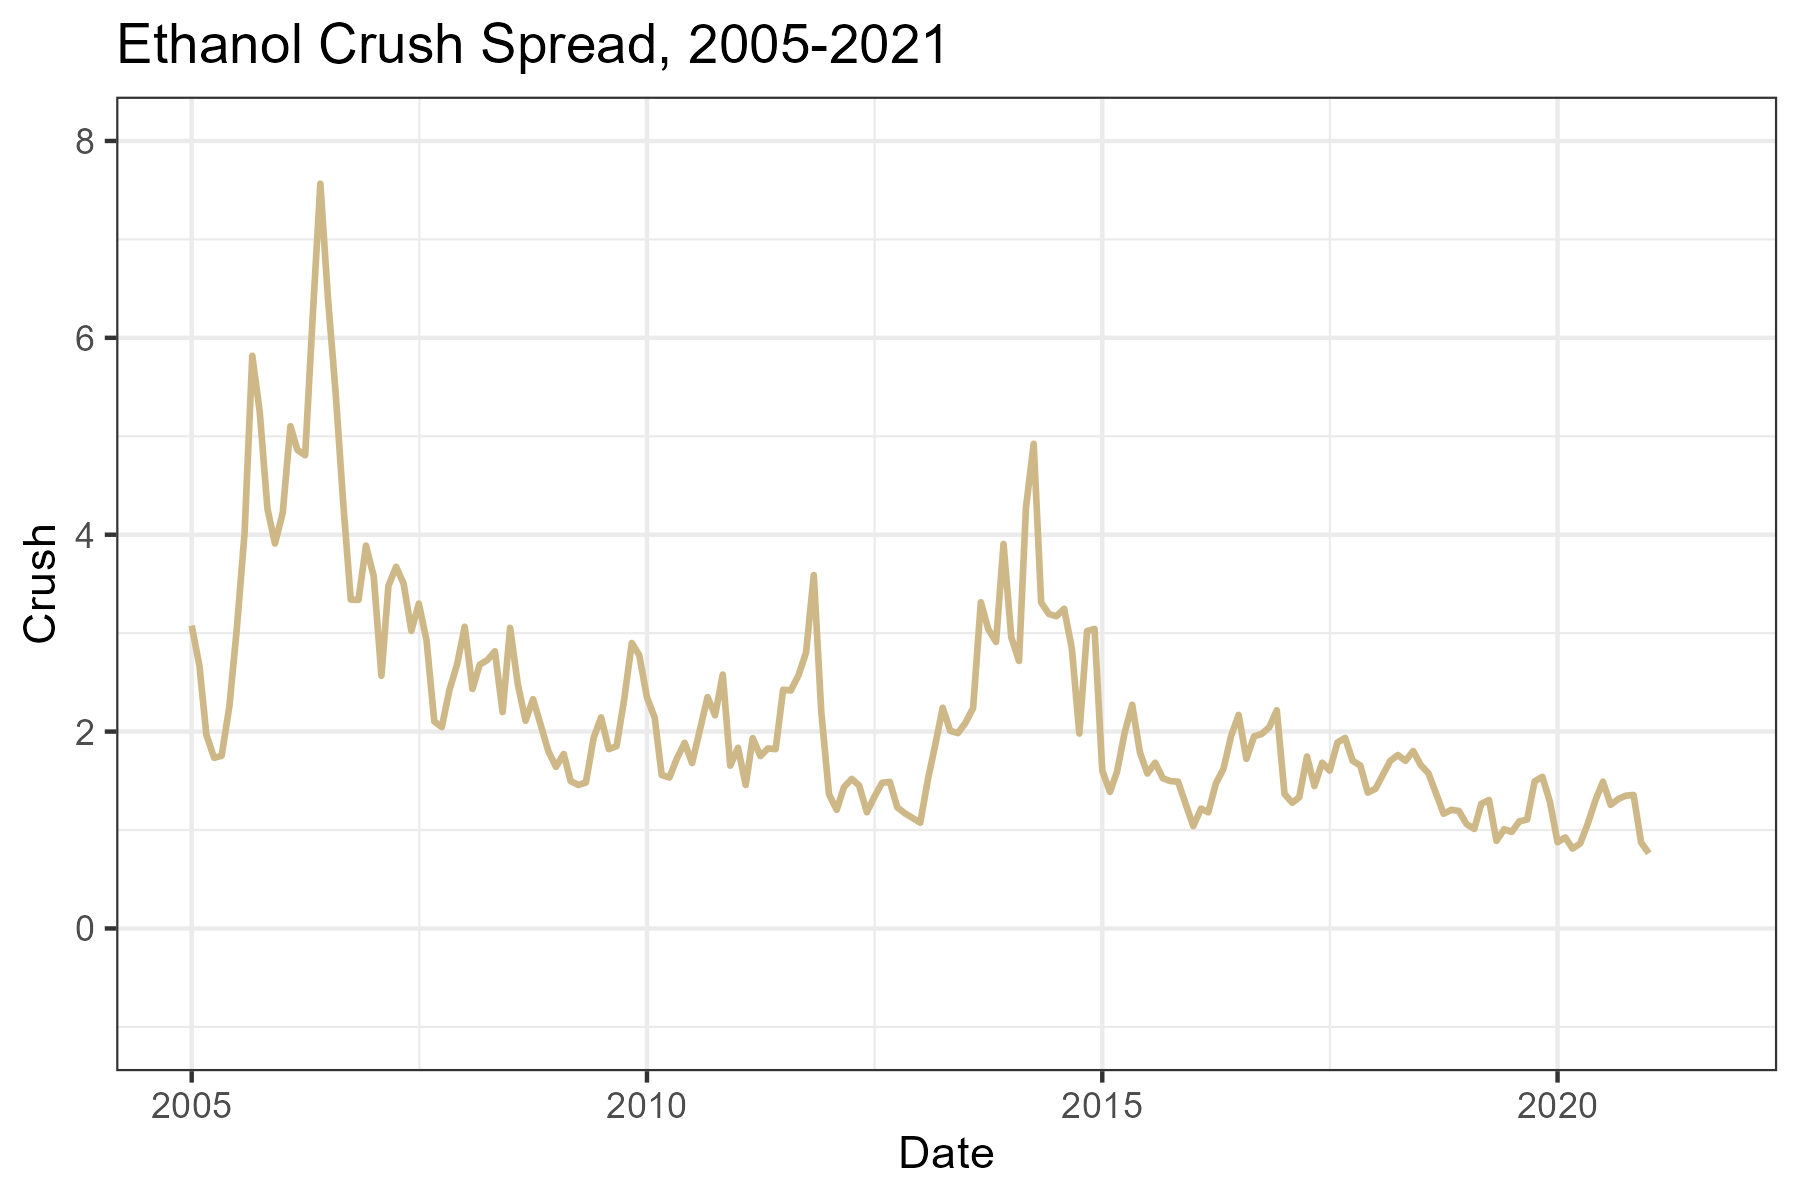 Figure 6: Ethanol Crush Spread